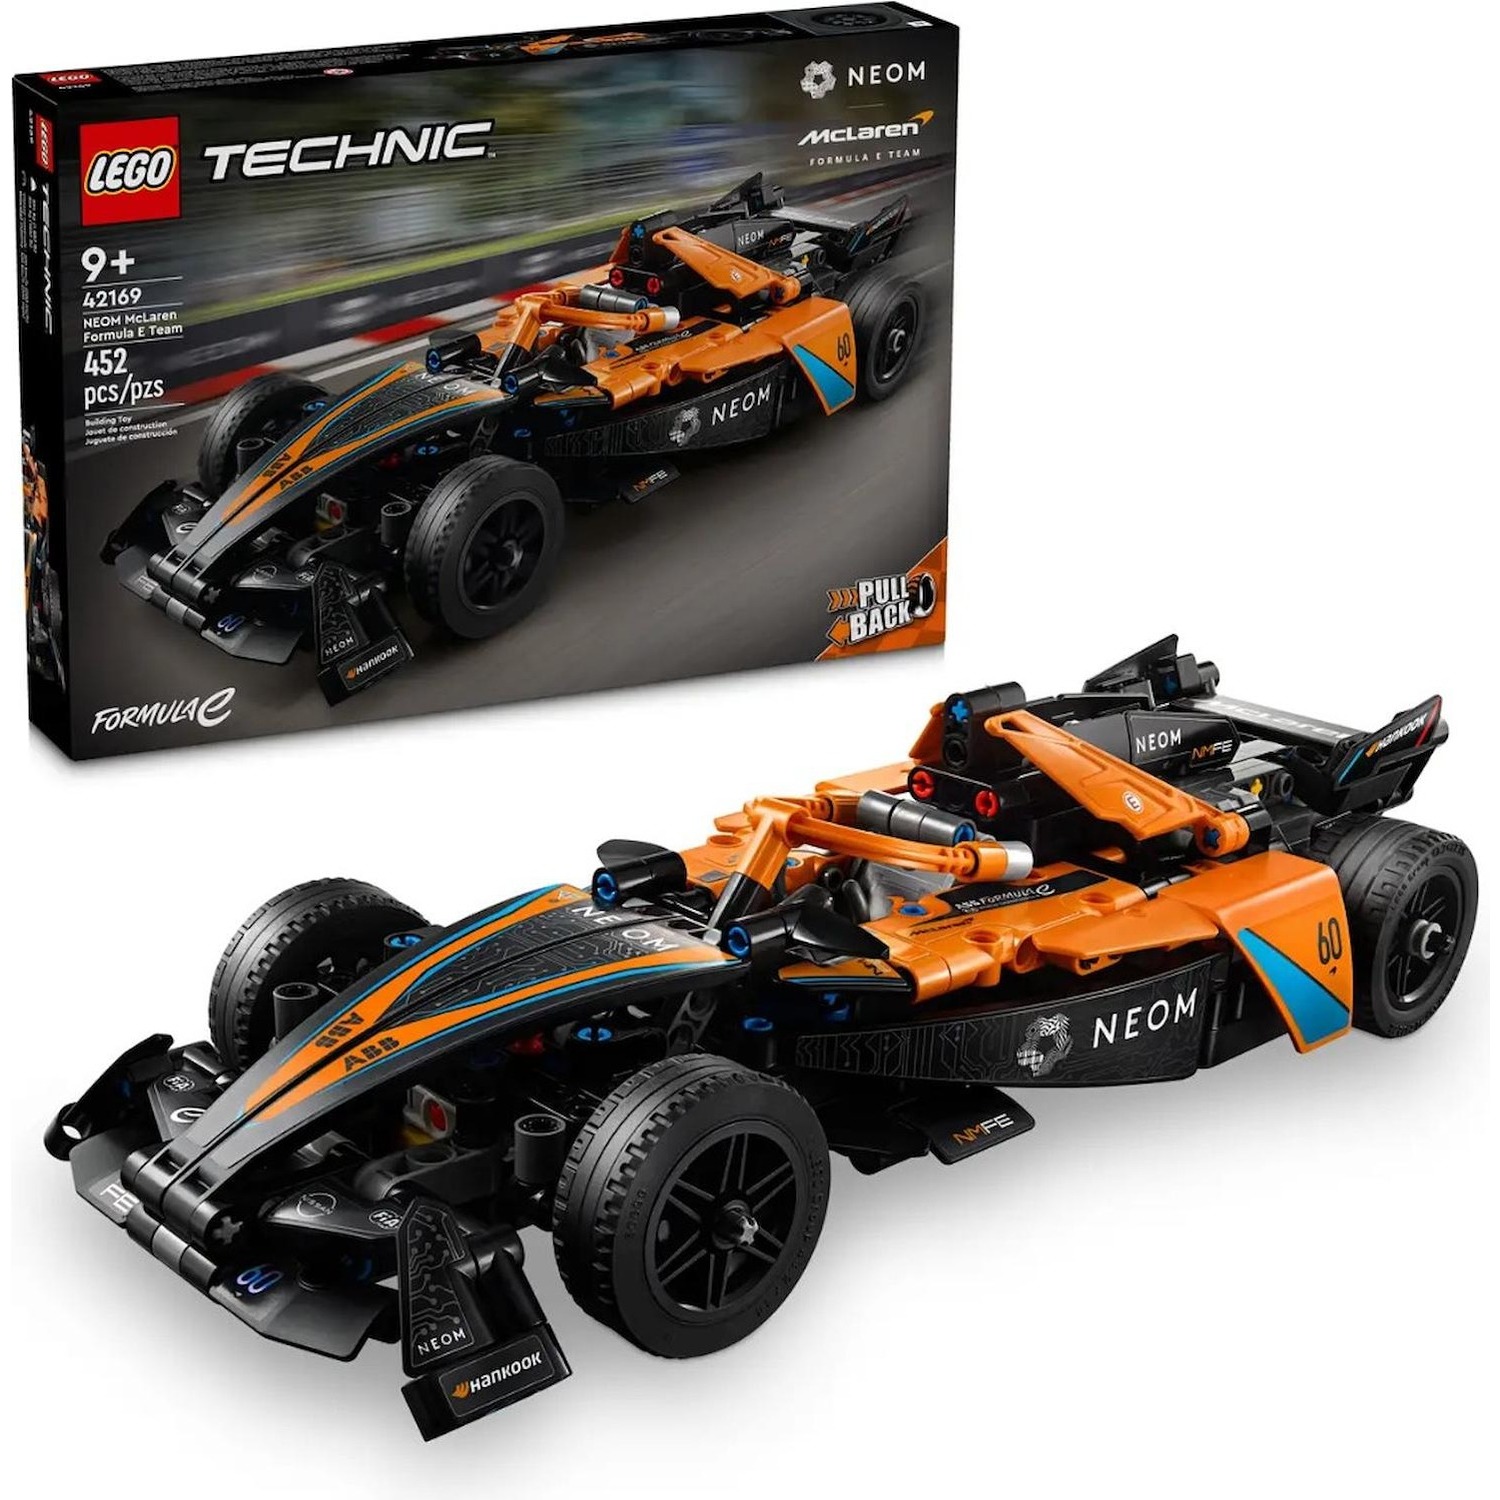 Immagine per Lego Technic NEOM McLaren Formula E Race car da DIMOStore